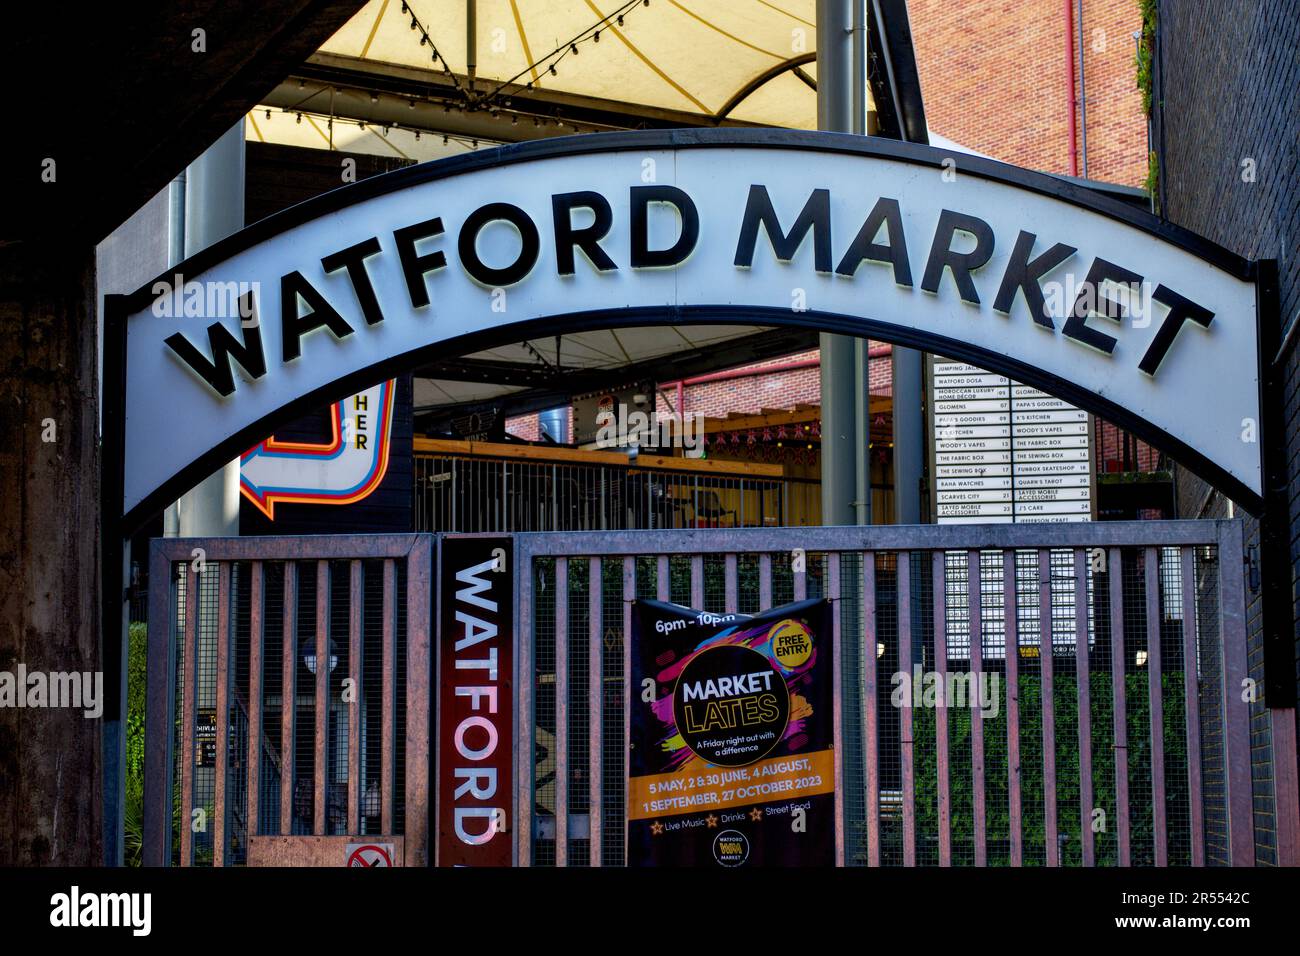 Watford Market Entrance sign, Watford, Herts, England, UK Stock Photo